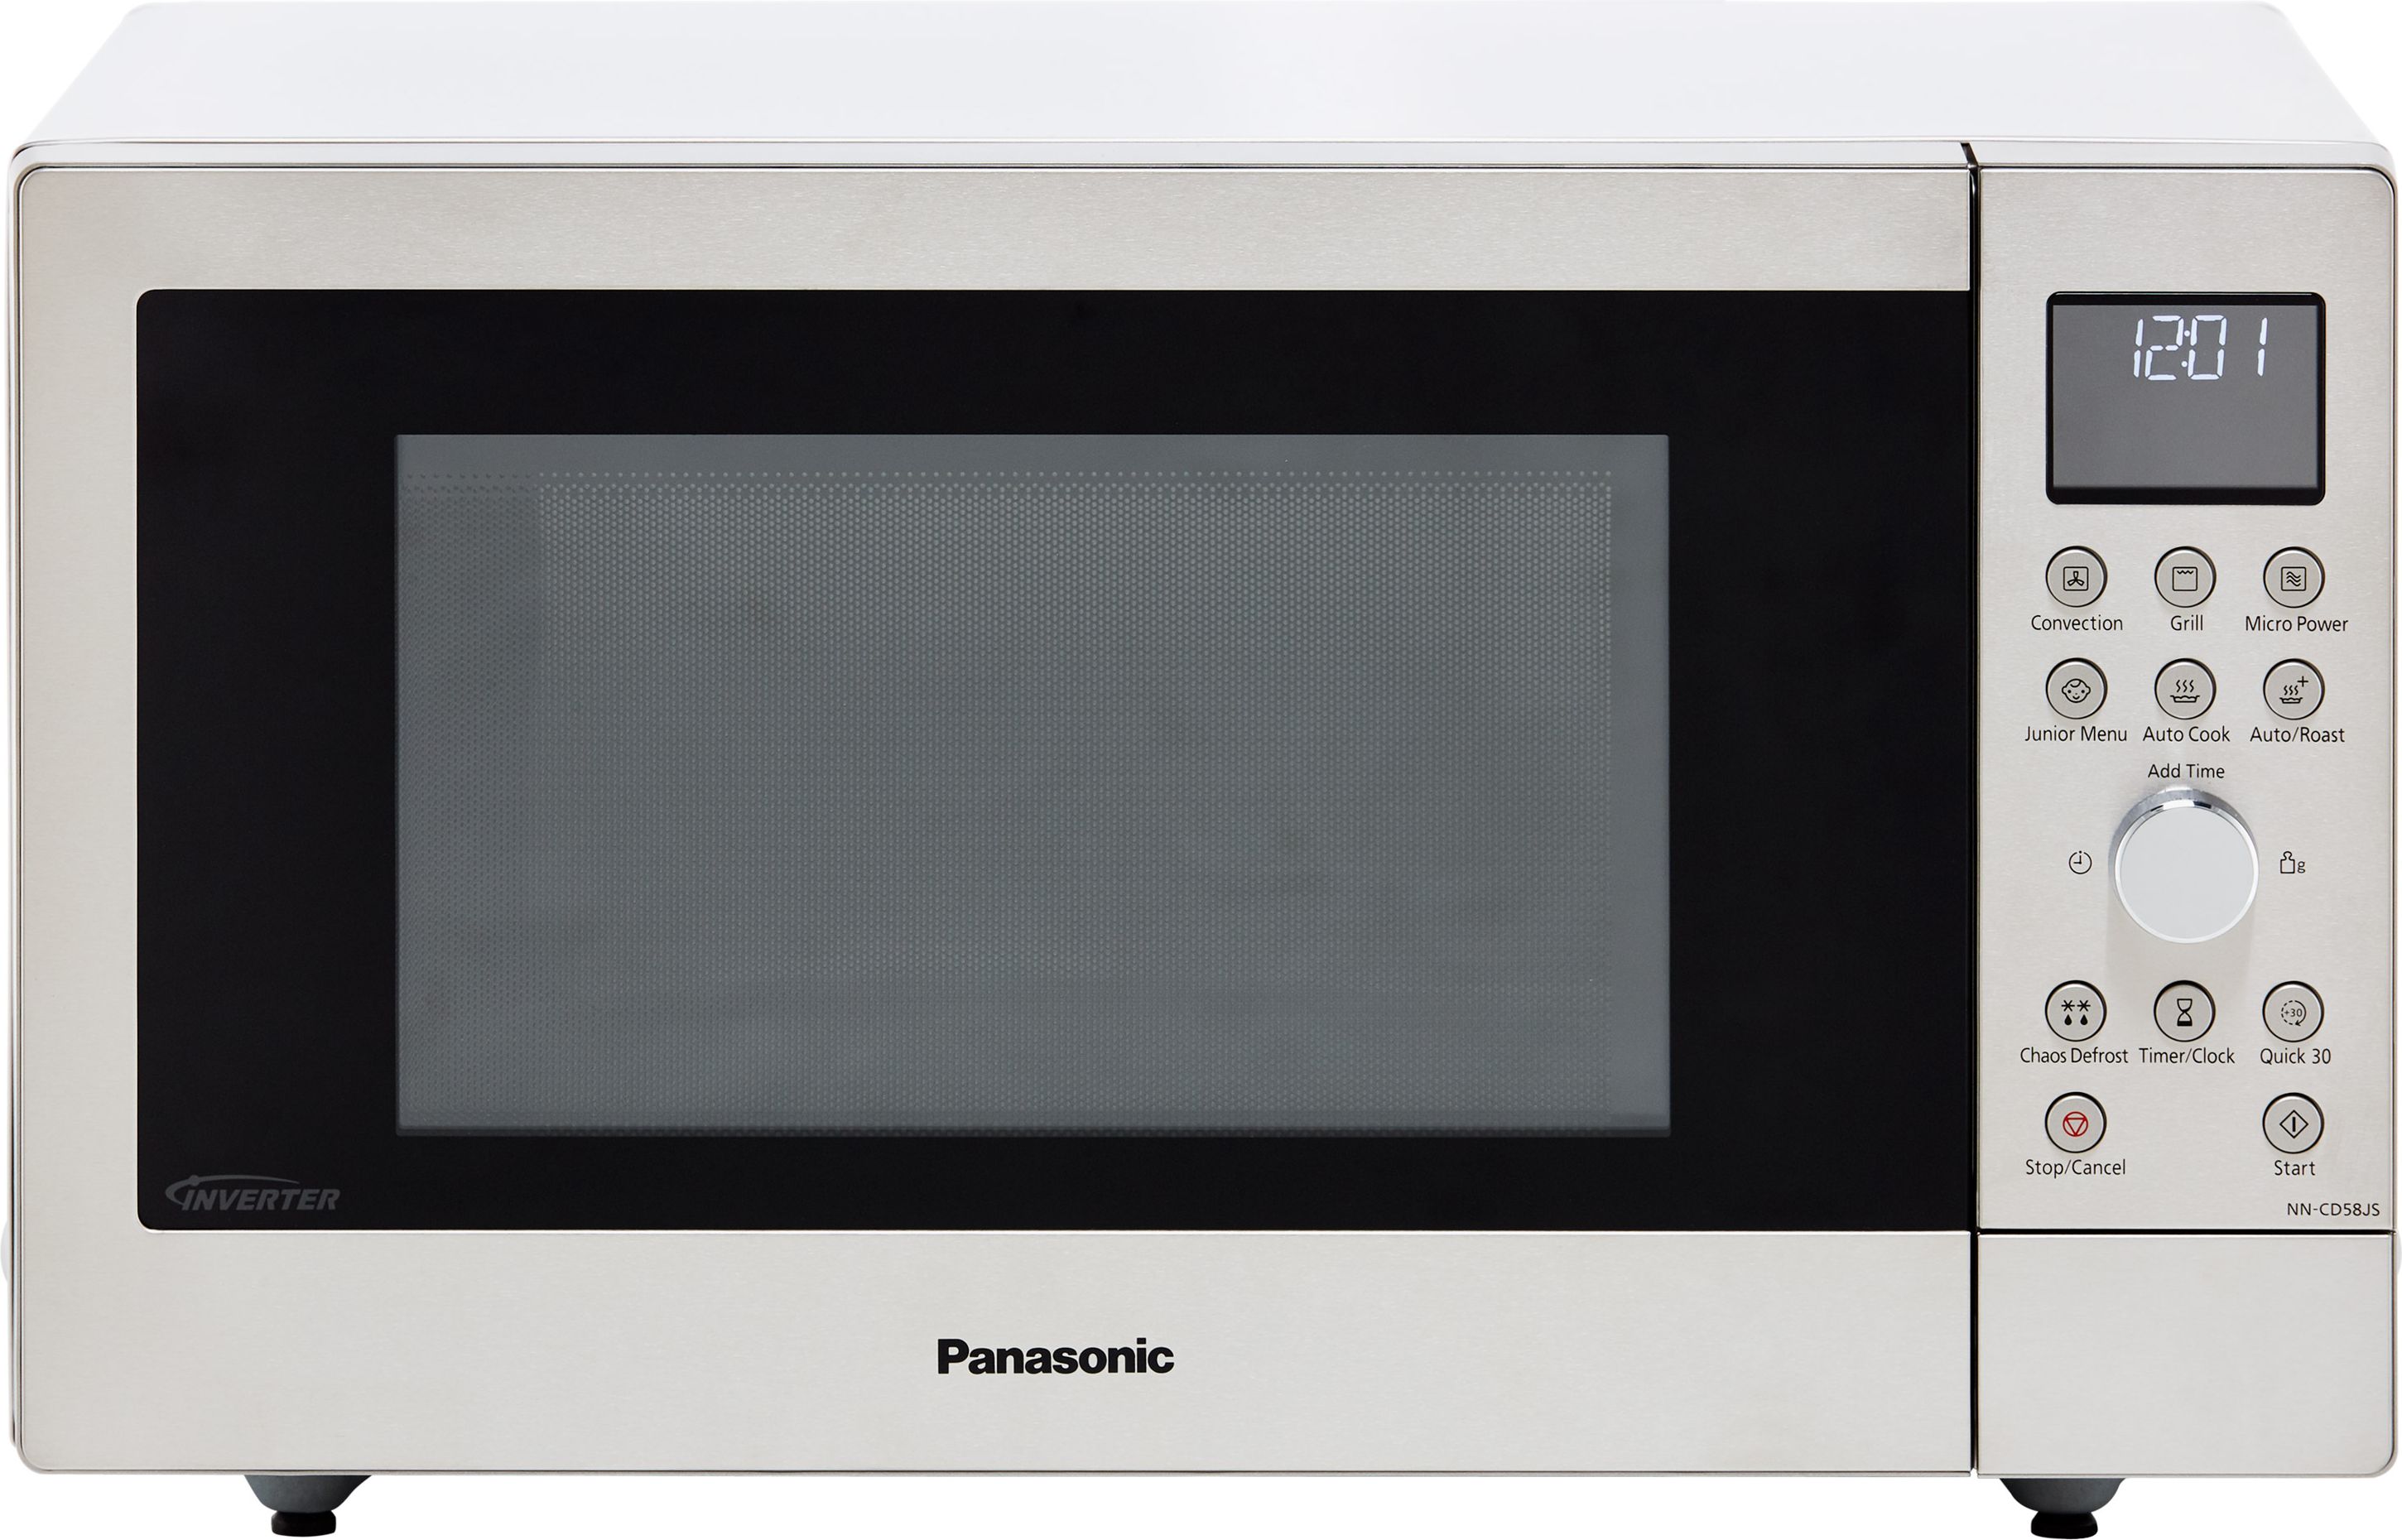 Panasonic NN-CD58JSBPQ 31cm tall, 52cm wide, Freestanding Microwave - Stainless Steel, Stainless Steel